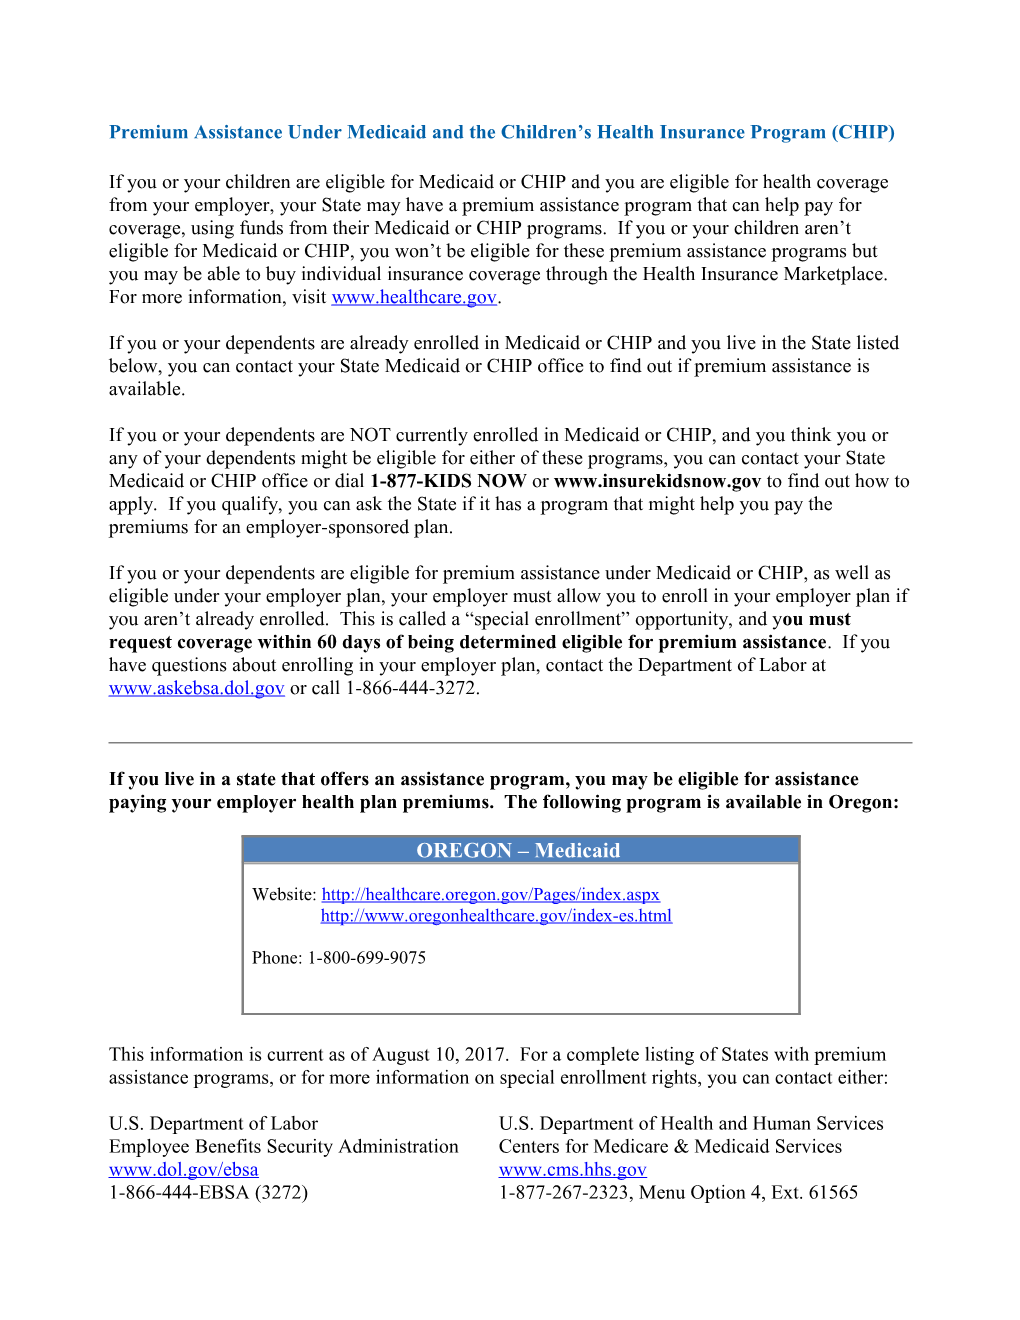 Children's Health Insurance Program (CHIP) Model Notice